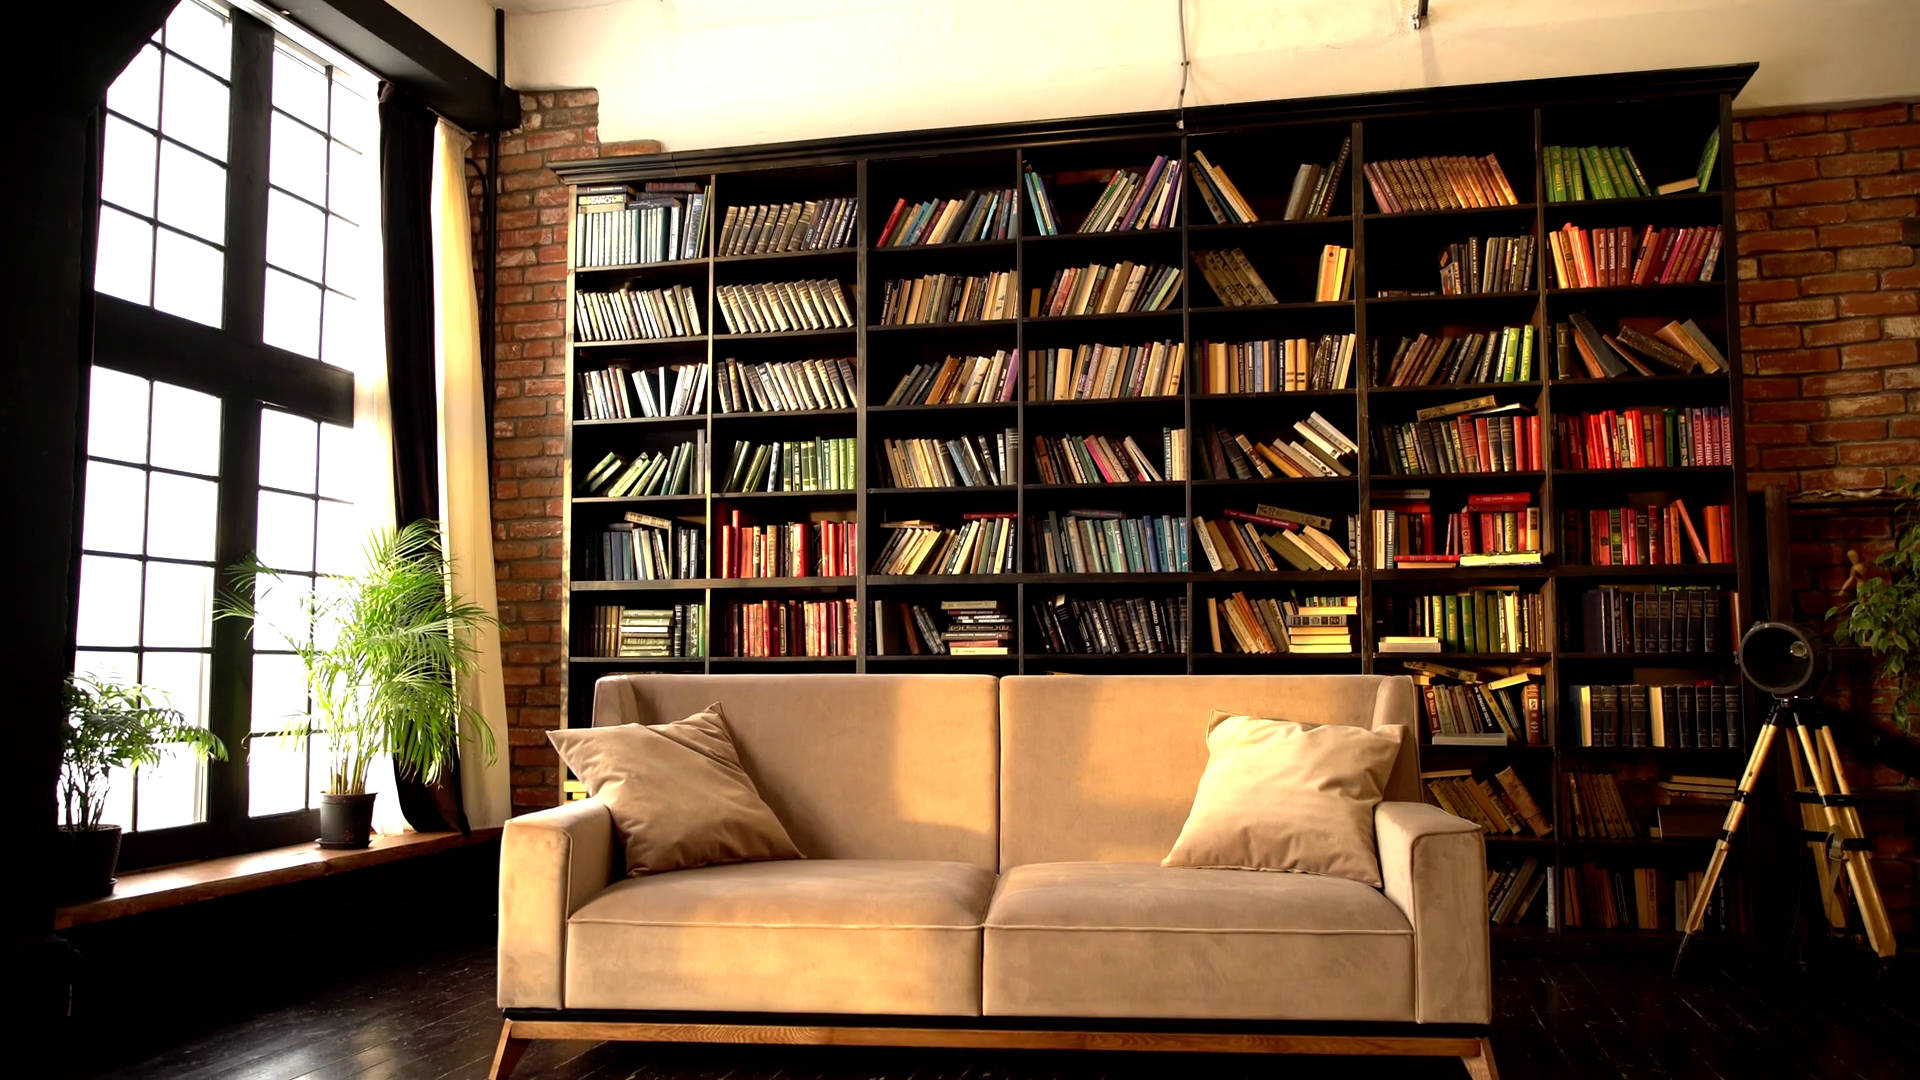 Living Room With Big Bookshelf Wallpaper